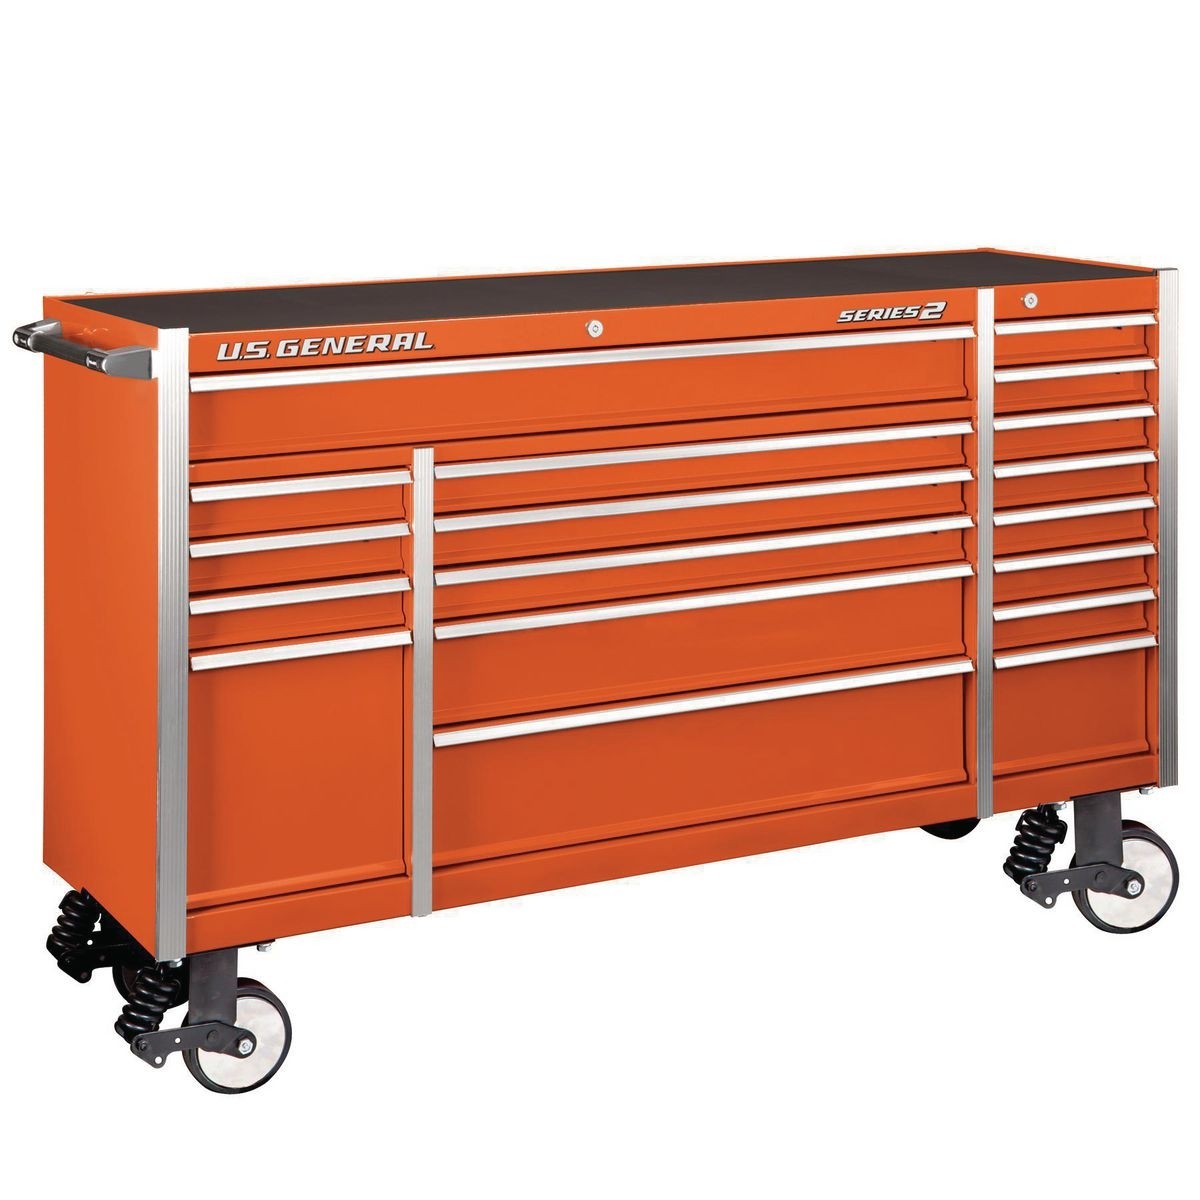 U.S. GENERAL 72 In. X 22 In. Triple Bank Roller Cabinet – Orange – Item 56117